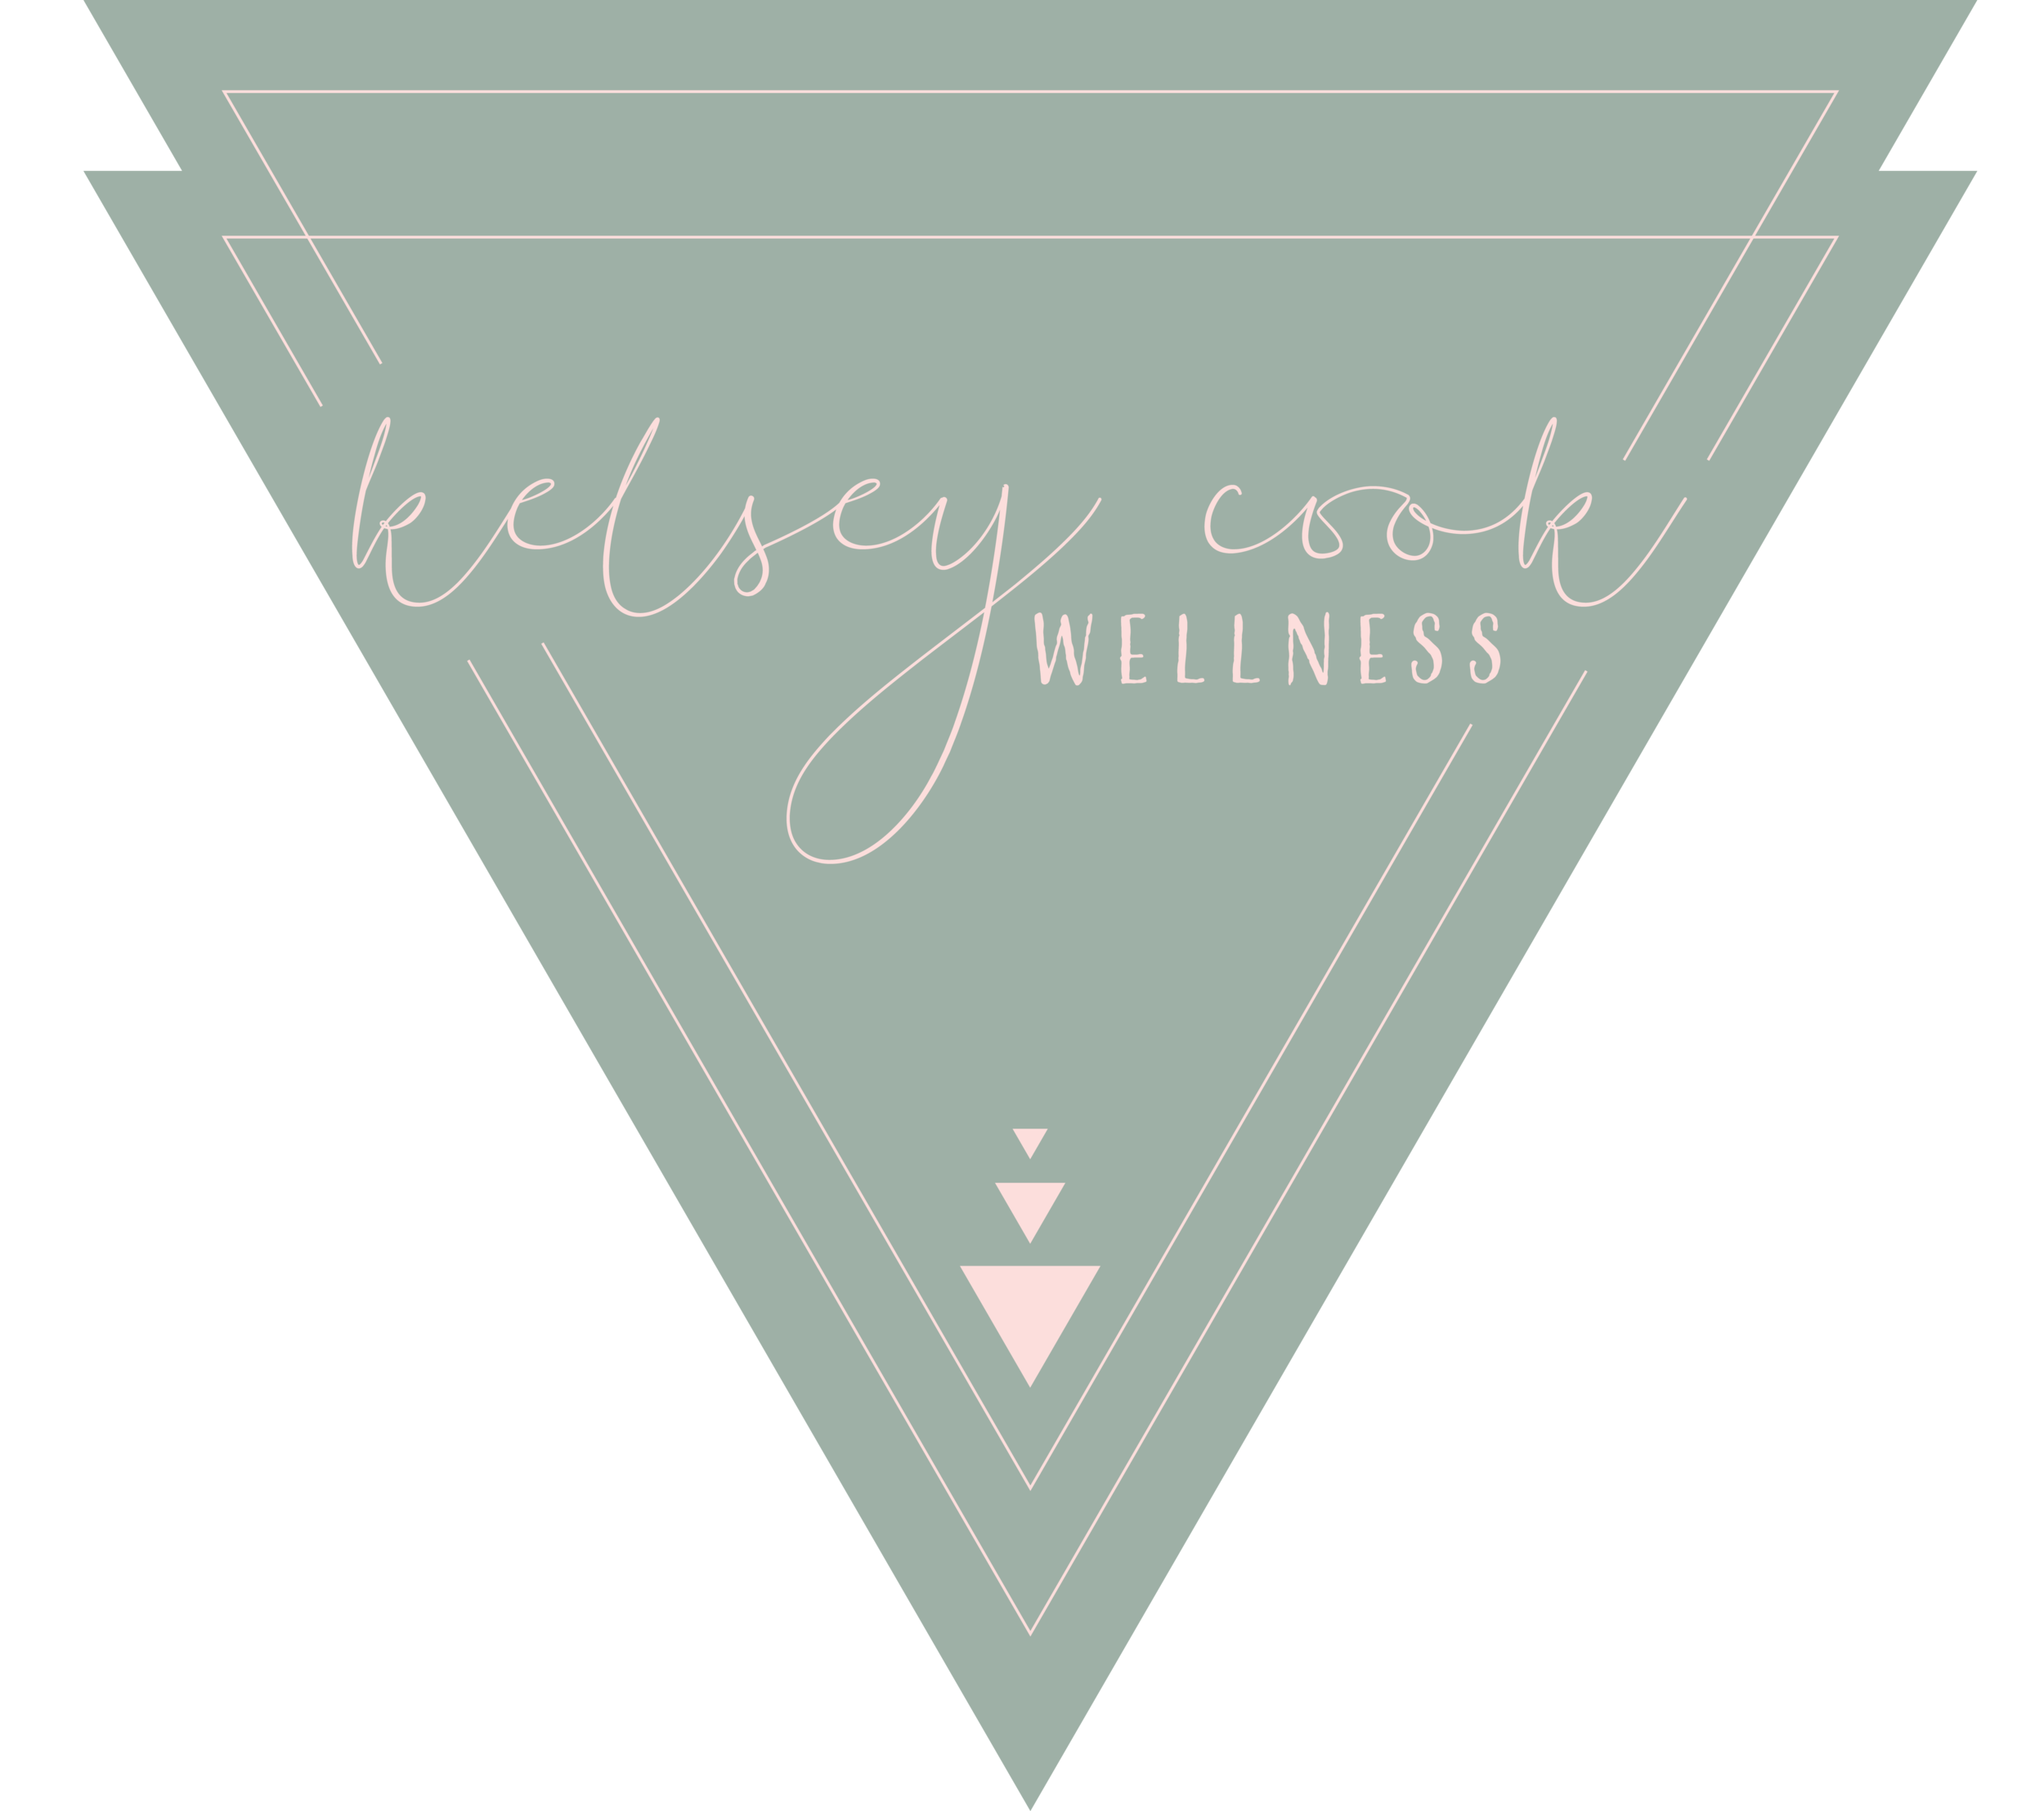 Kelsey Cook Wellness